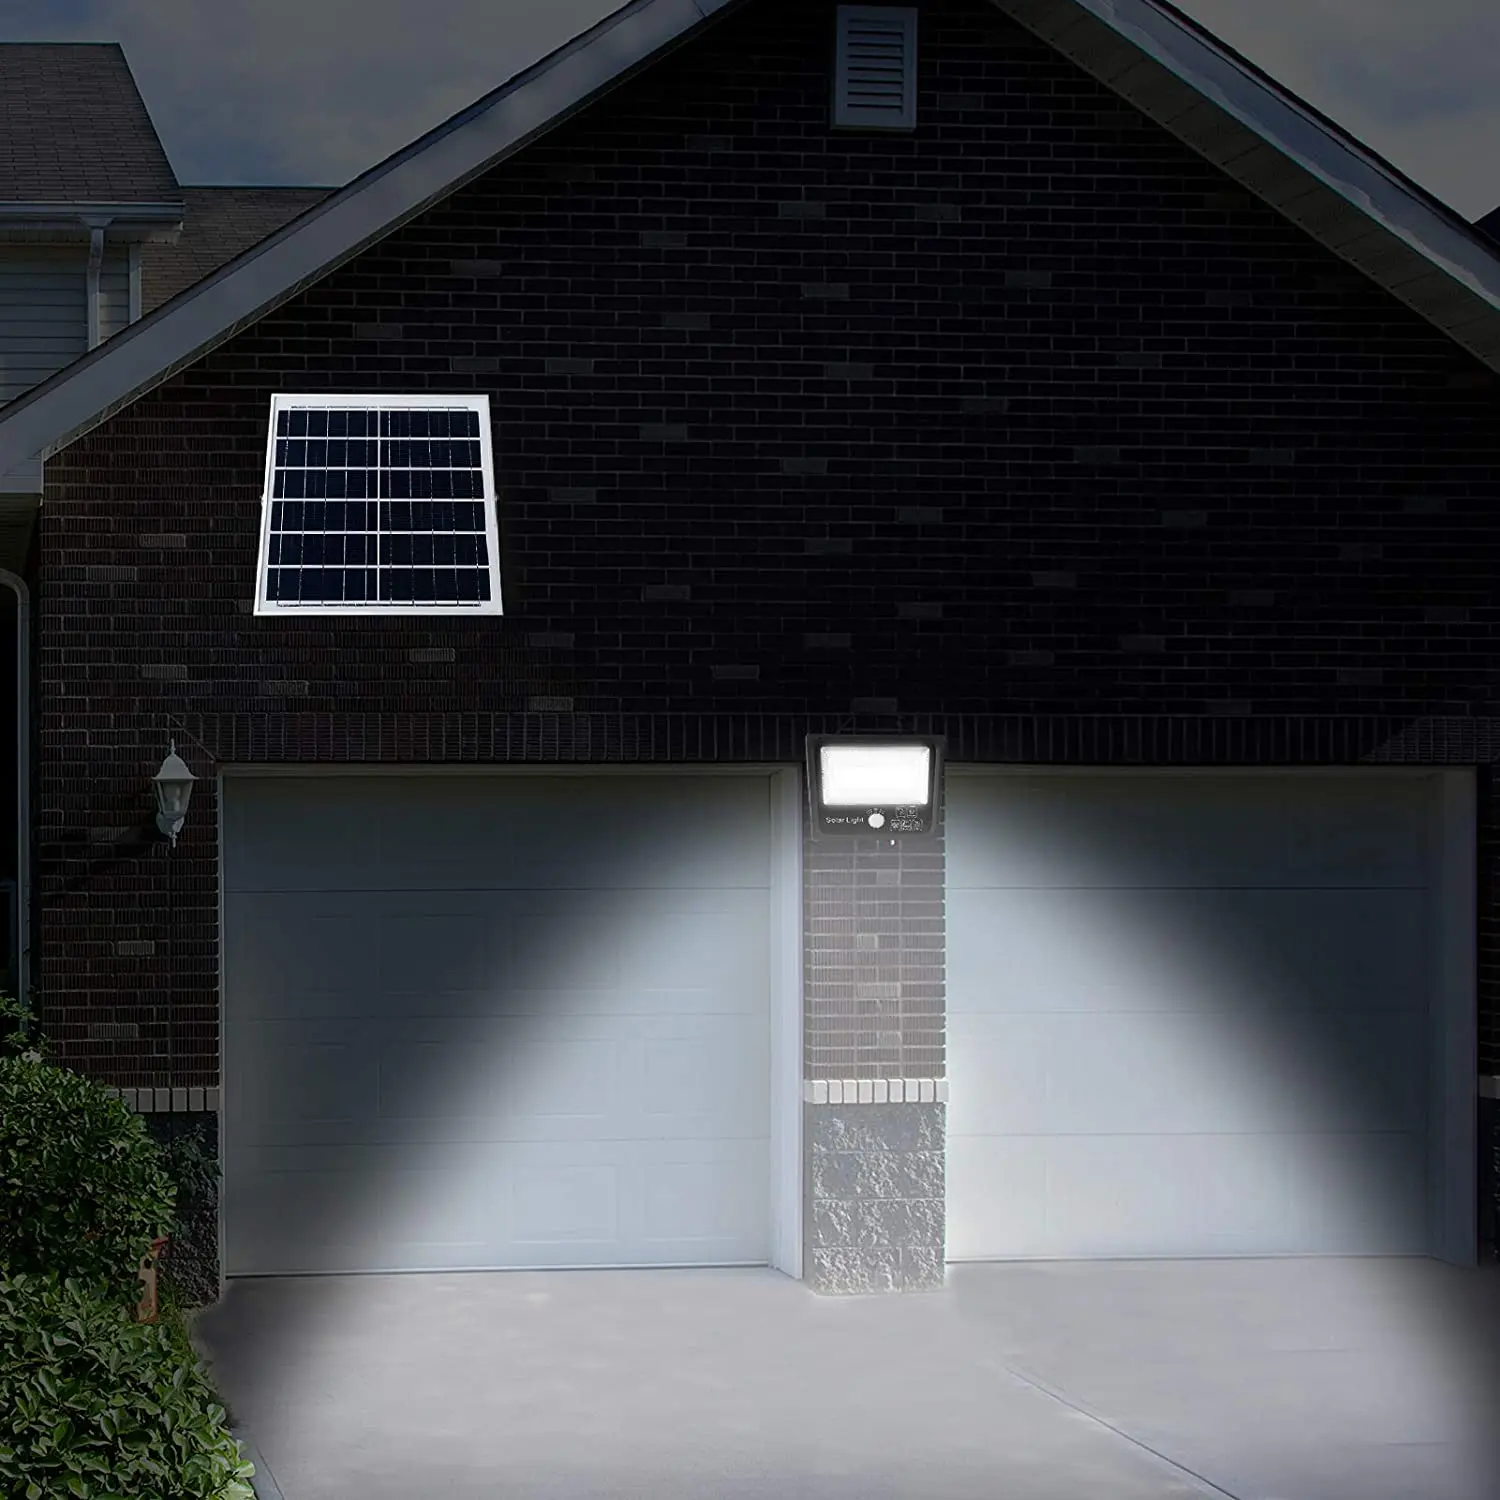 Outdoor Solar Light Powerful Led Waterproof IP67 Floodlight Lighting for Home Path Garage House Yard Garden Street Wall Lamp small solar lights